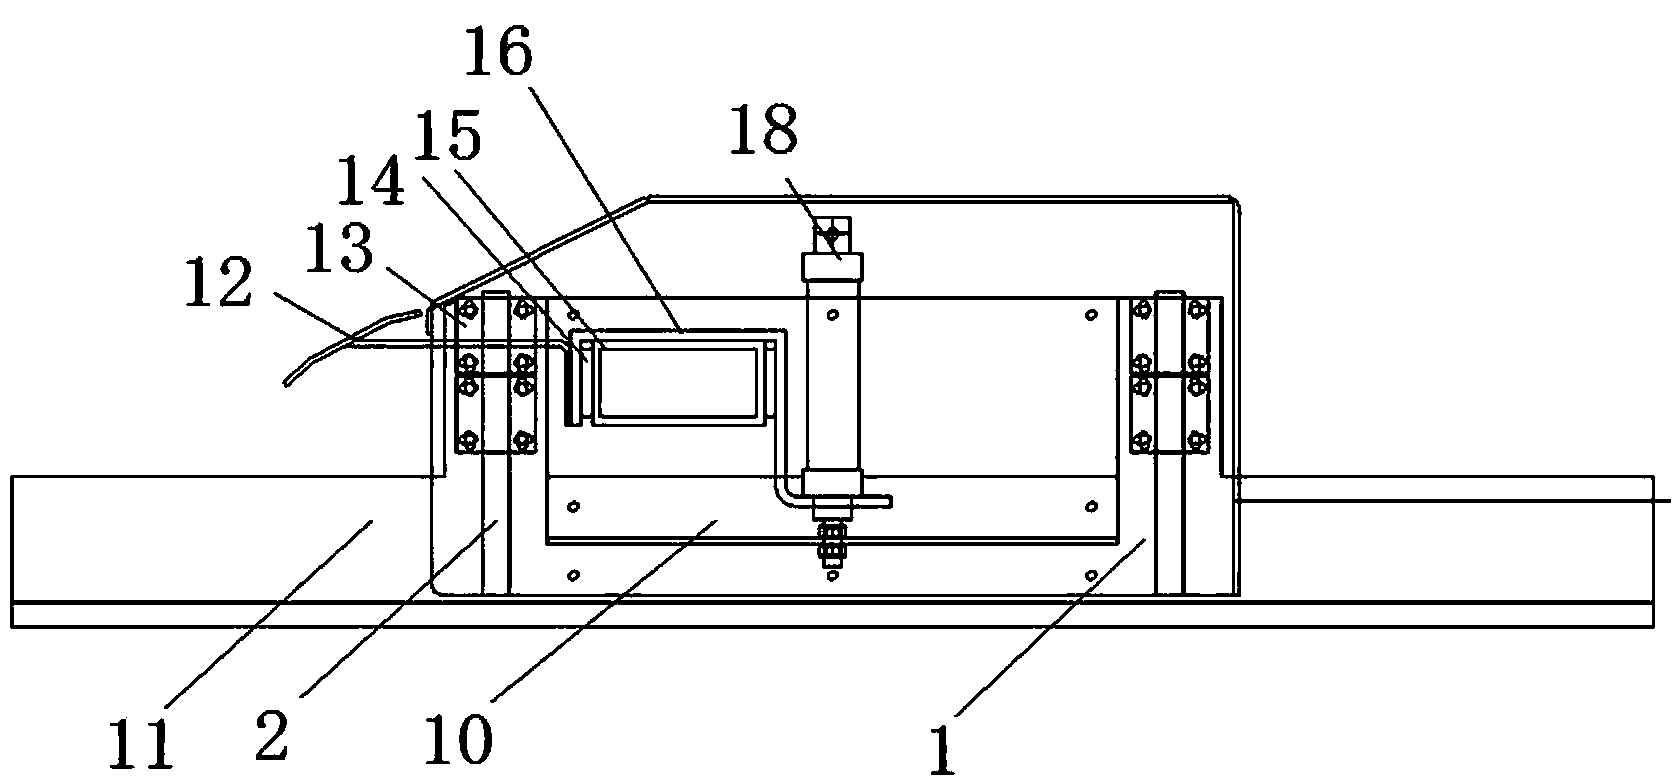 Folding machine with straight knife type folding mechanism